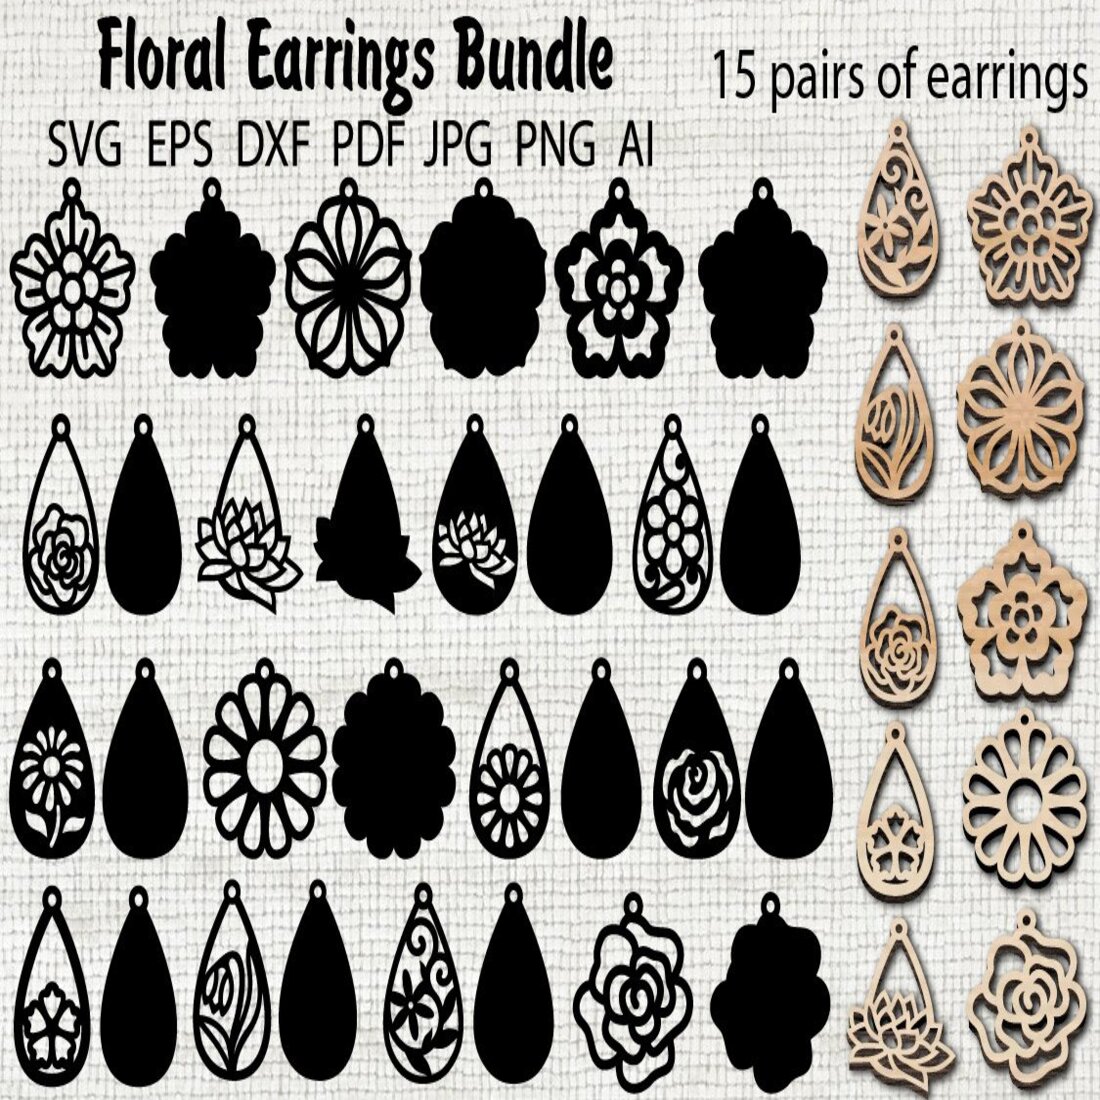 Floral Earrings SVG Bundle, Pendant Template For Laser Cut cover.